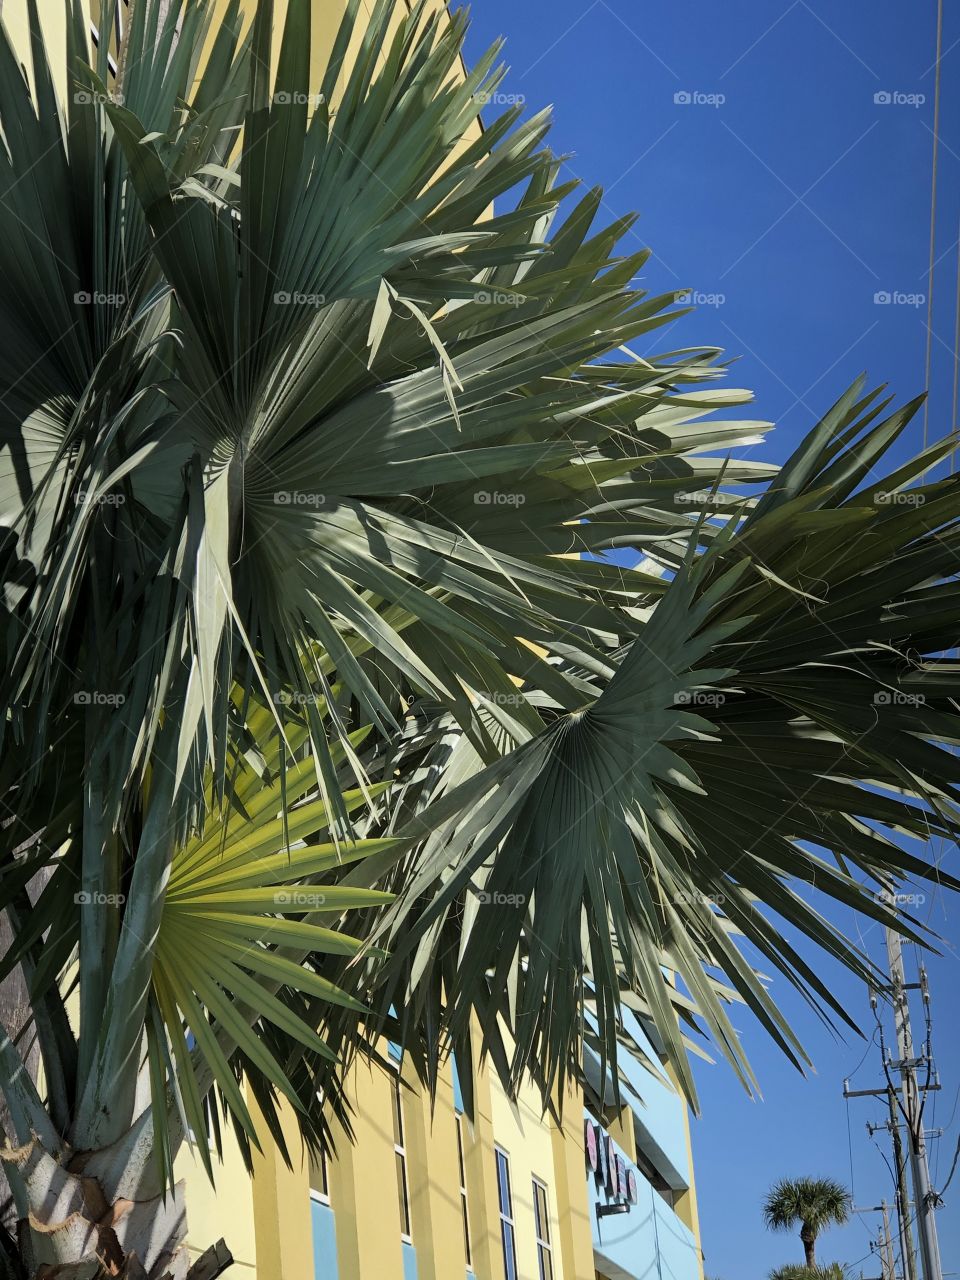 Palms and blue sky!